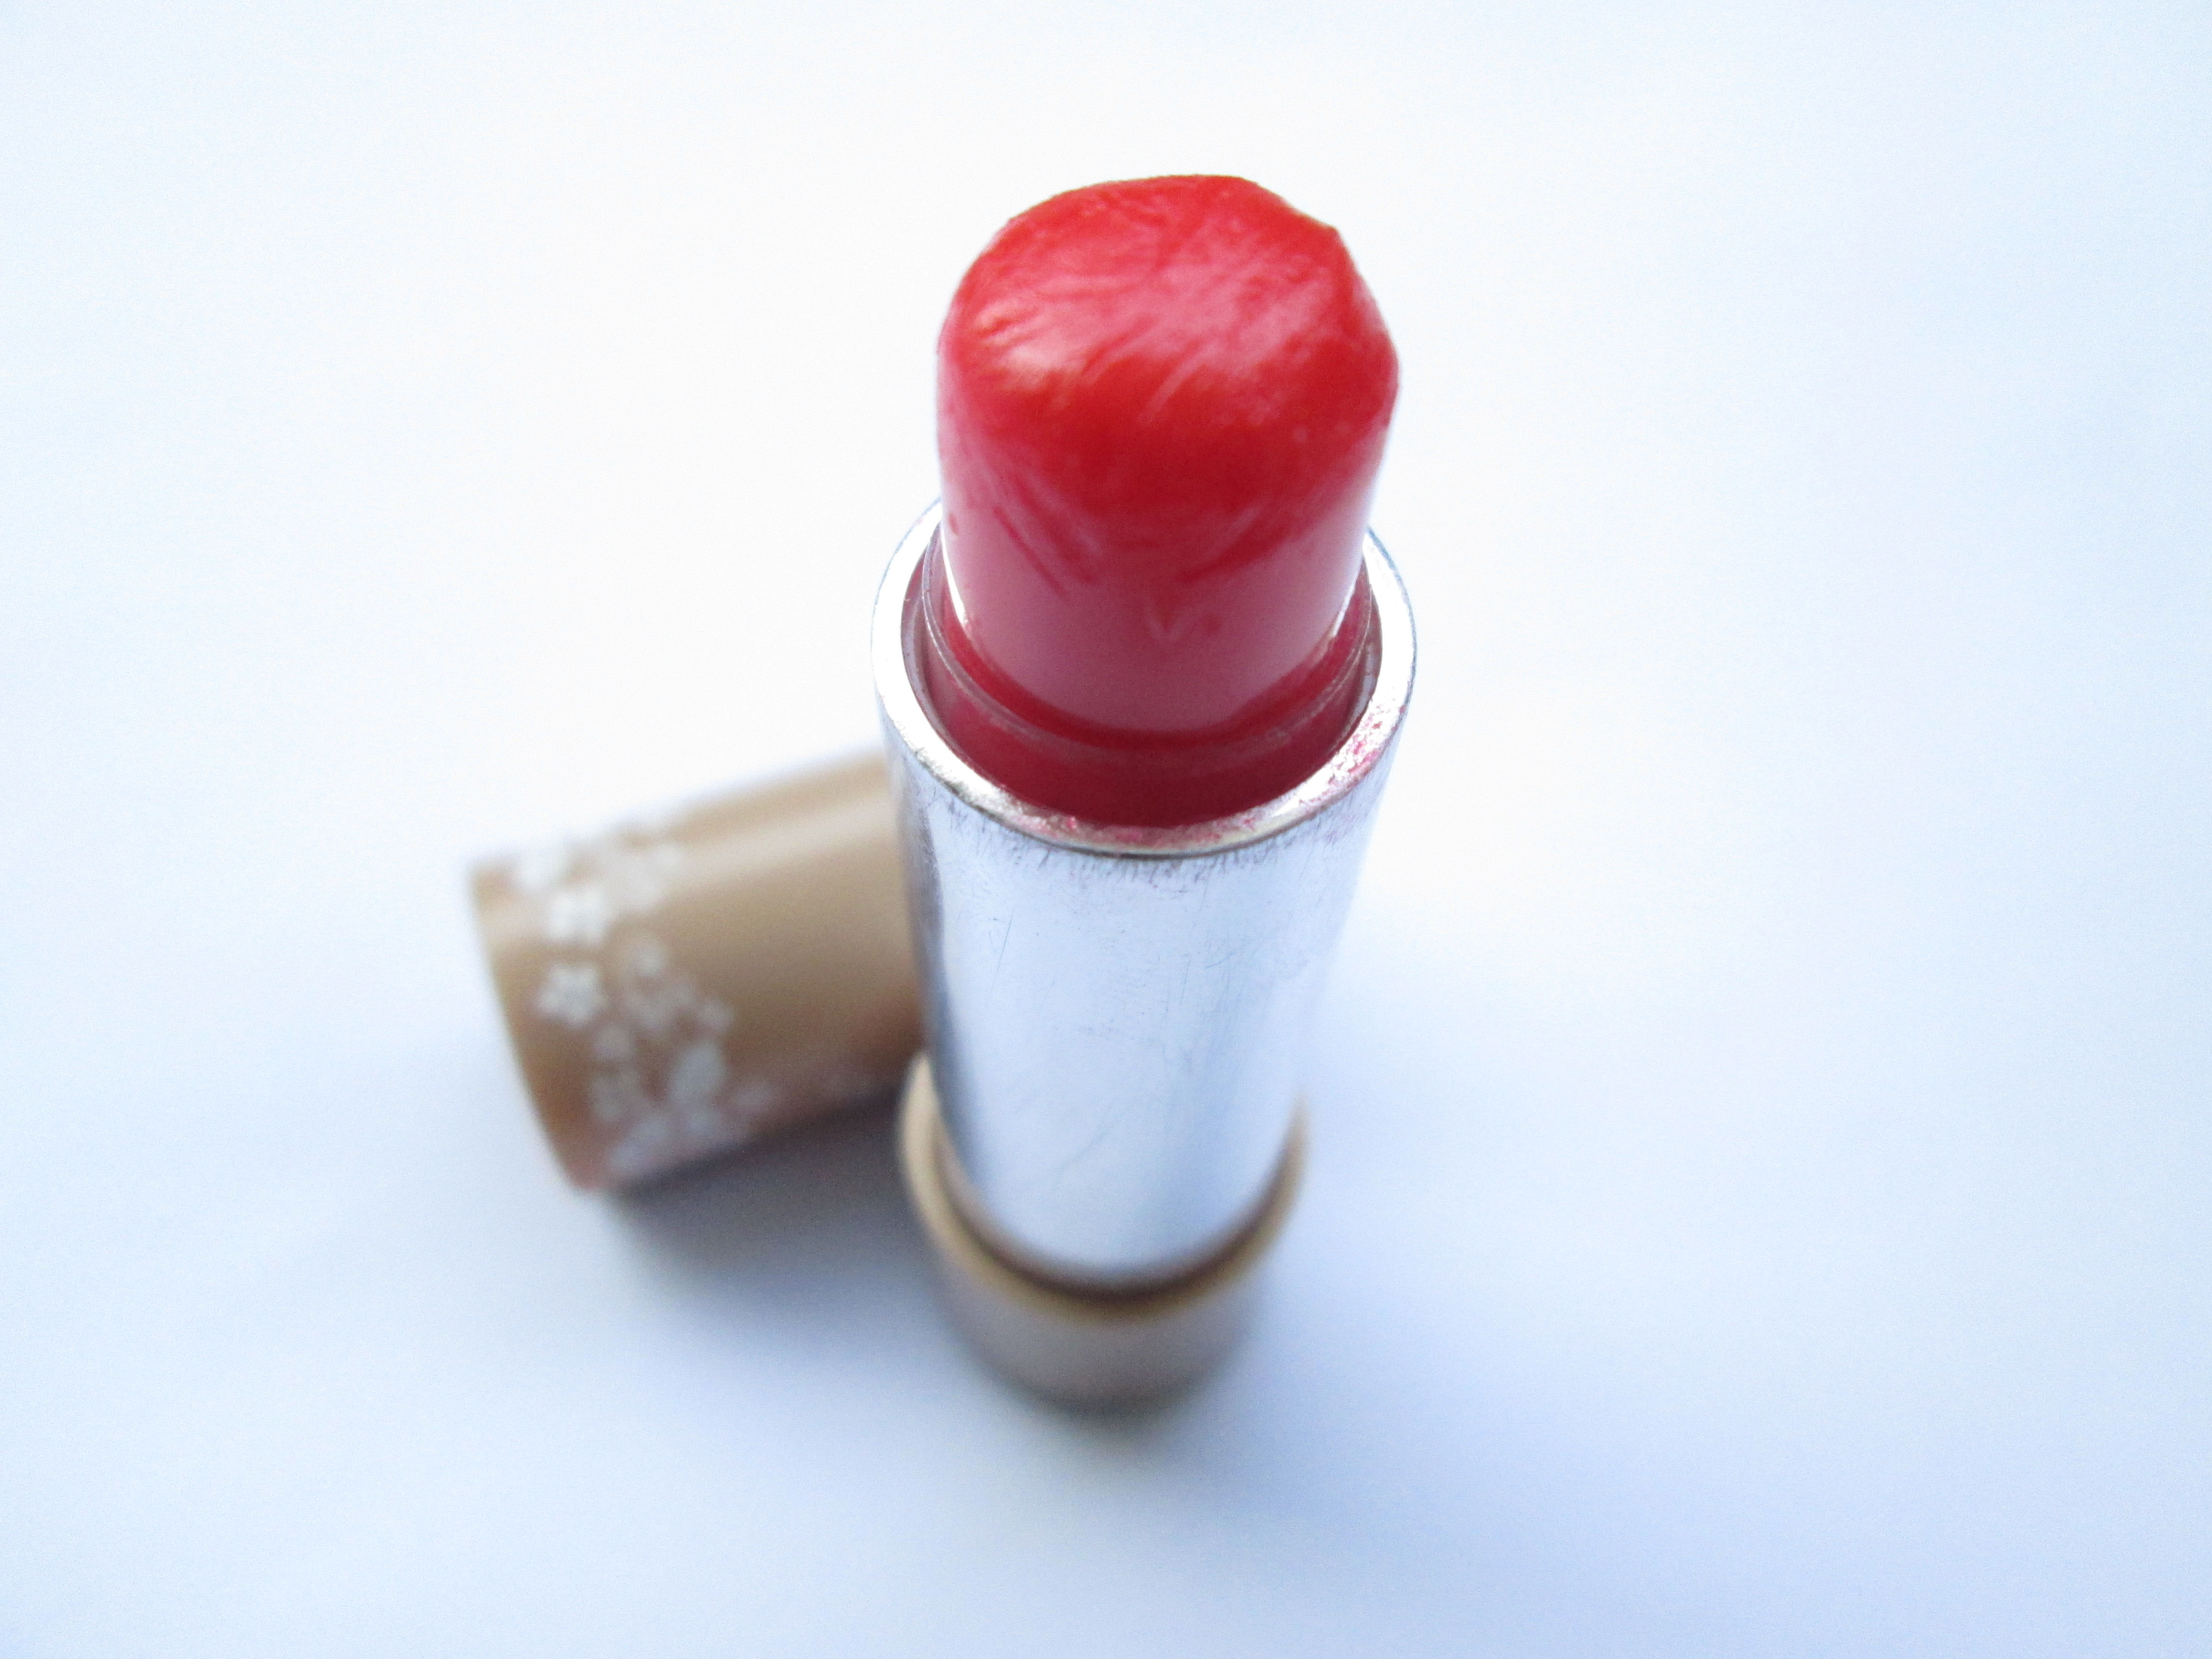 Lipstick or make-up photo